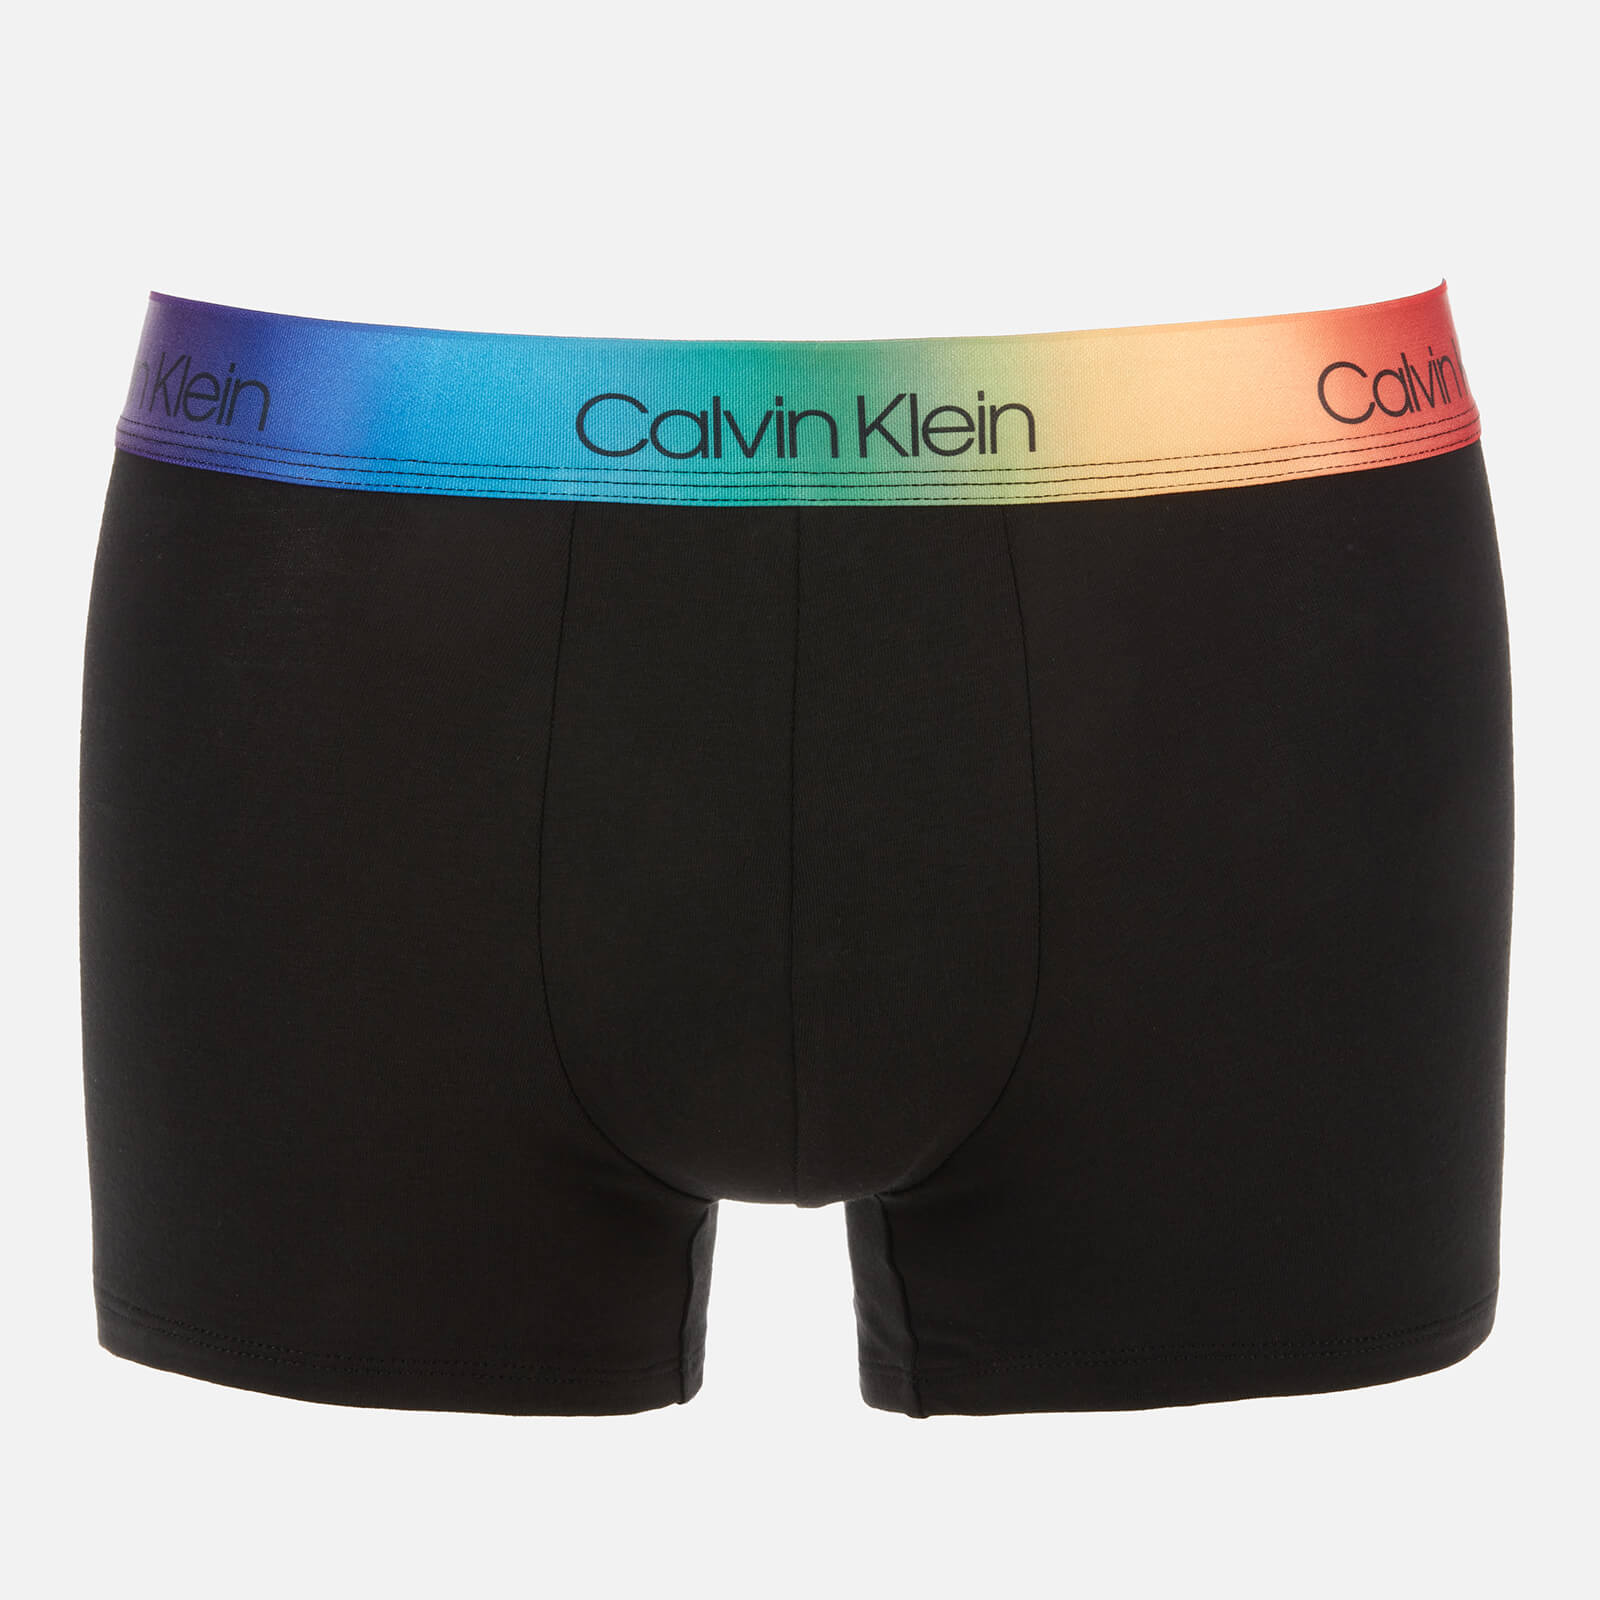 Calvin Klein Men's Rainbow Waistband Trunks - Black - S